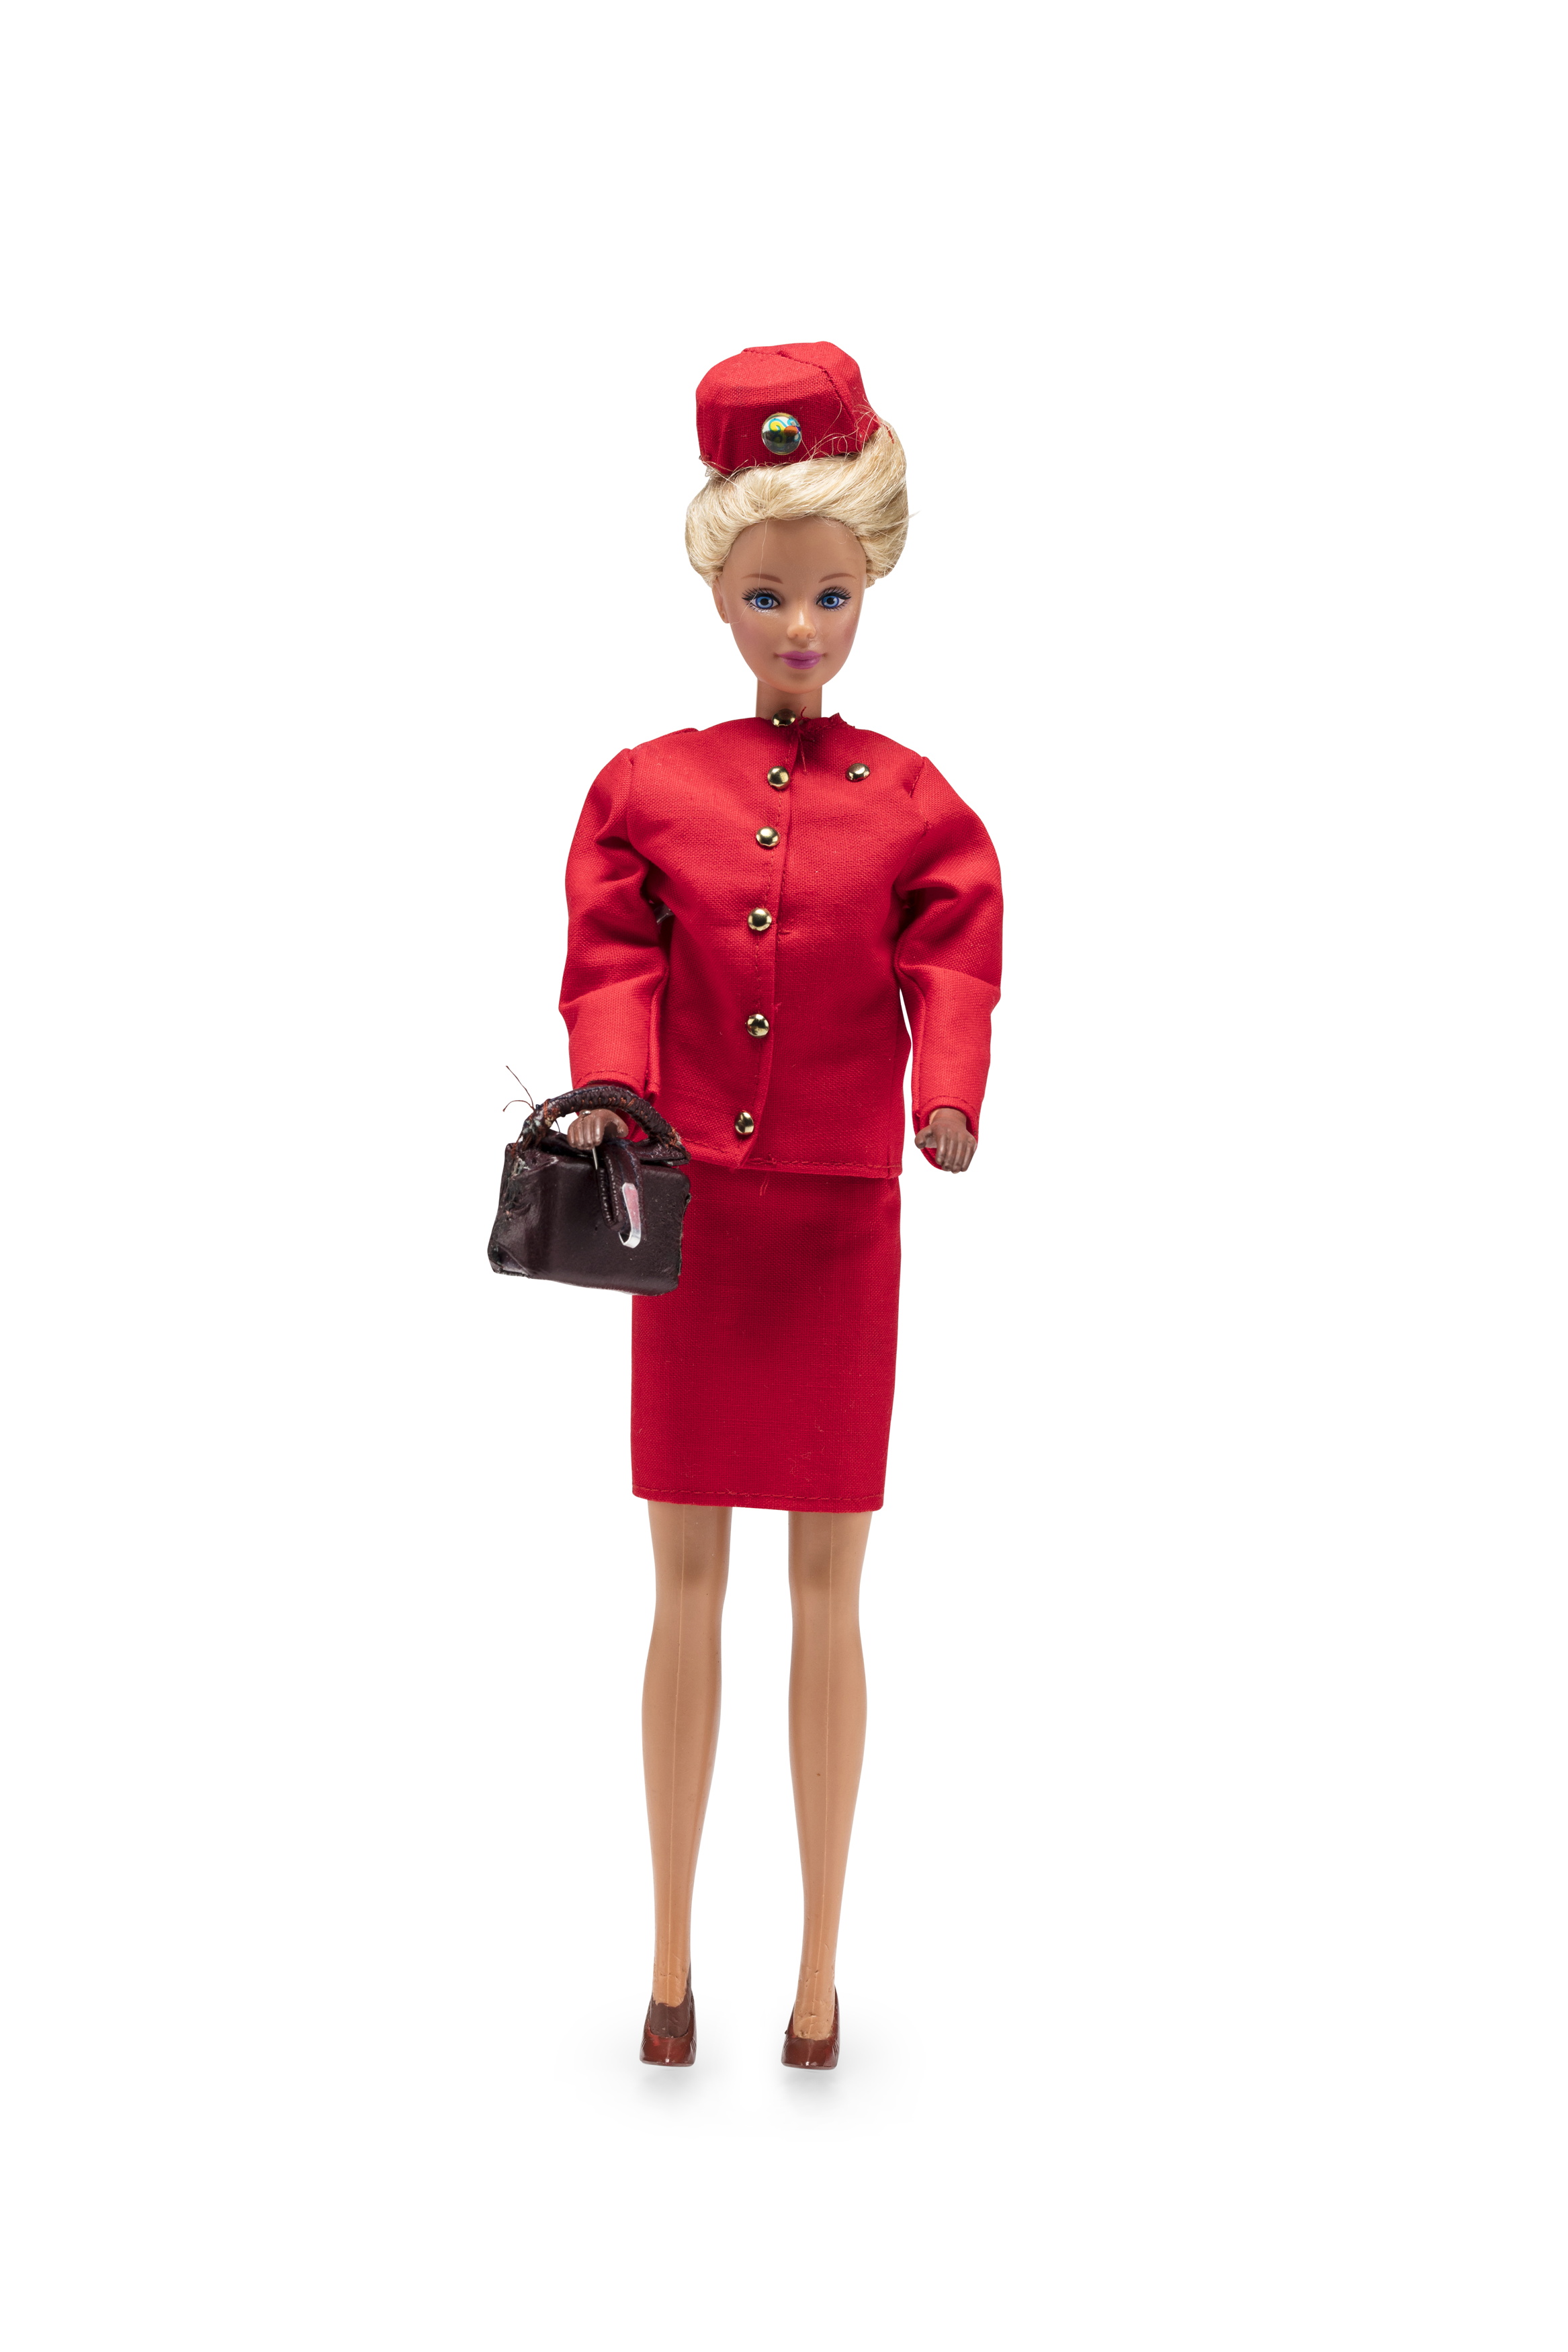 Barbie doll wearing Qantas uniform